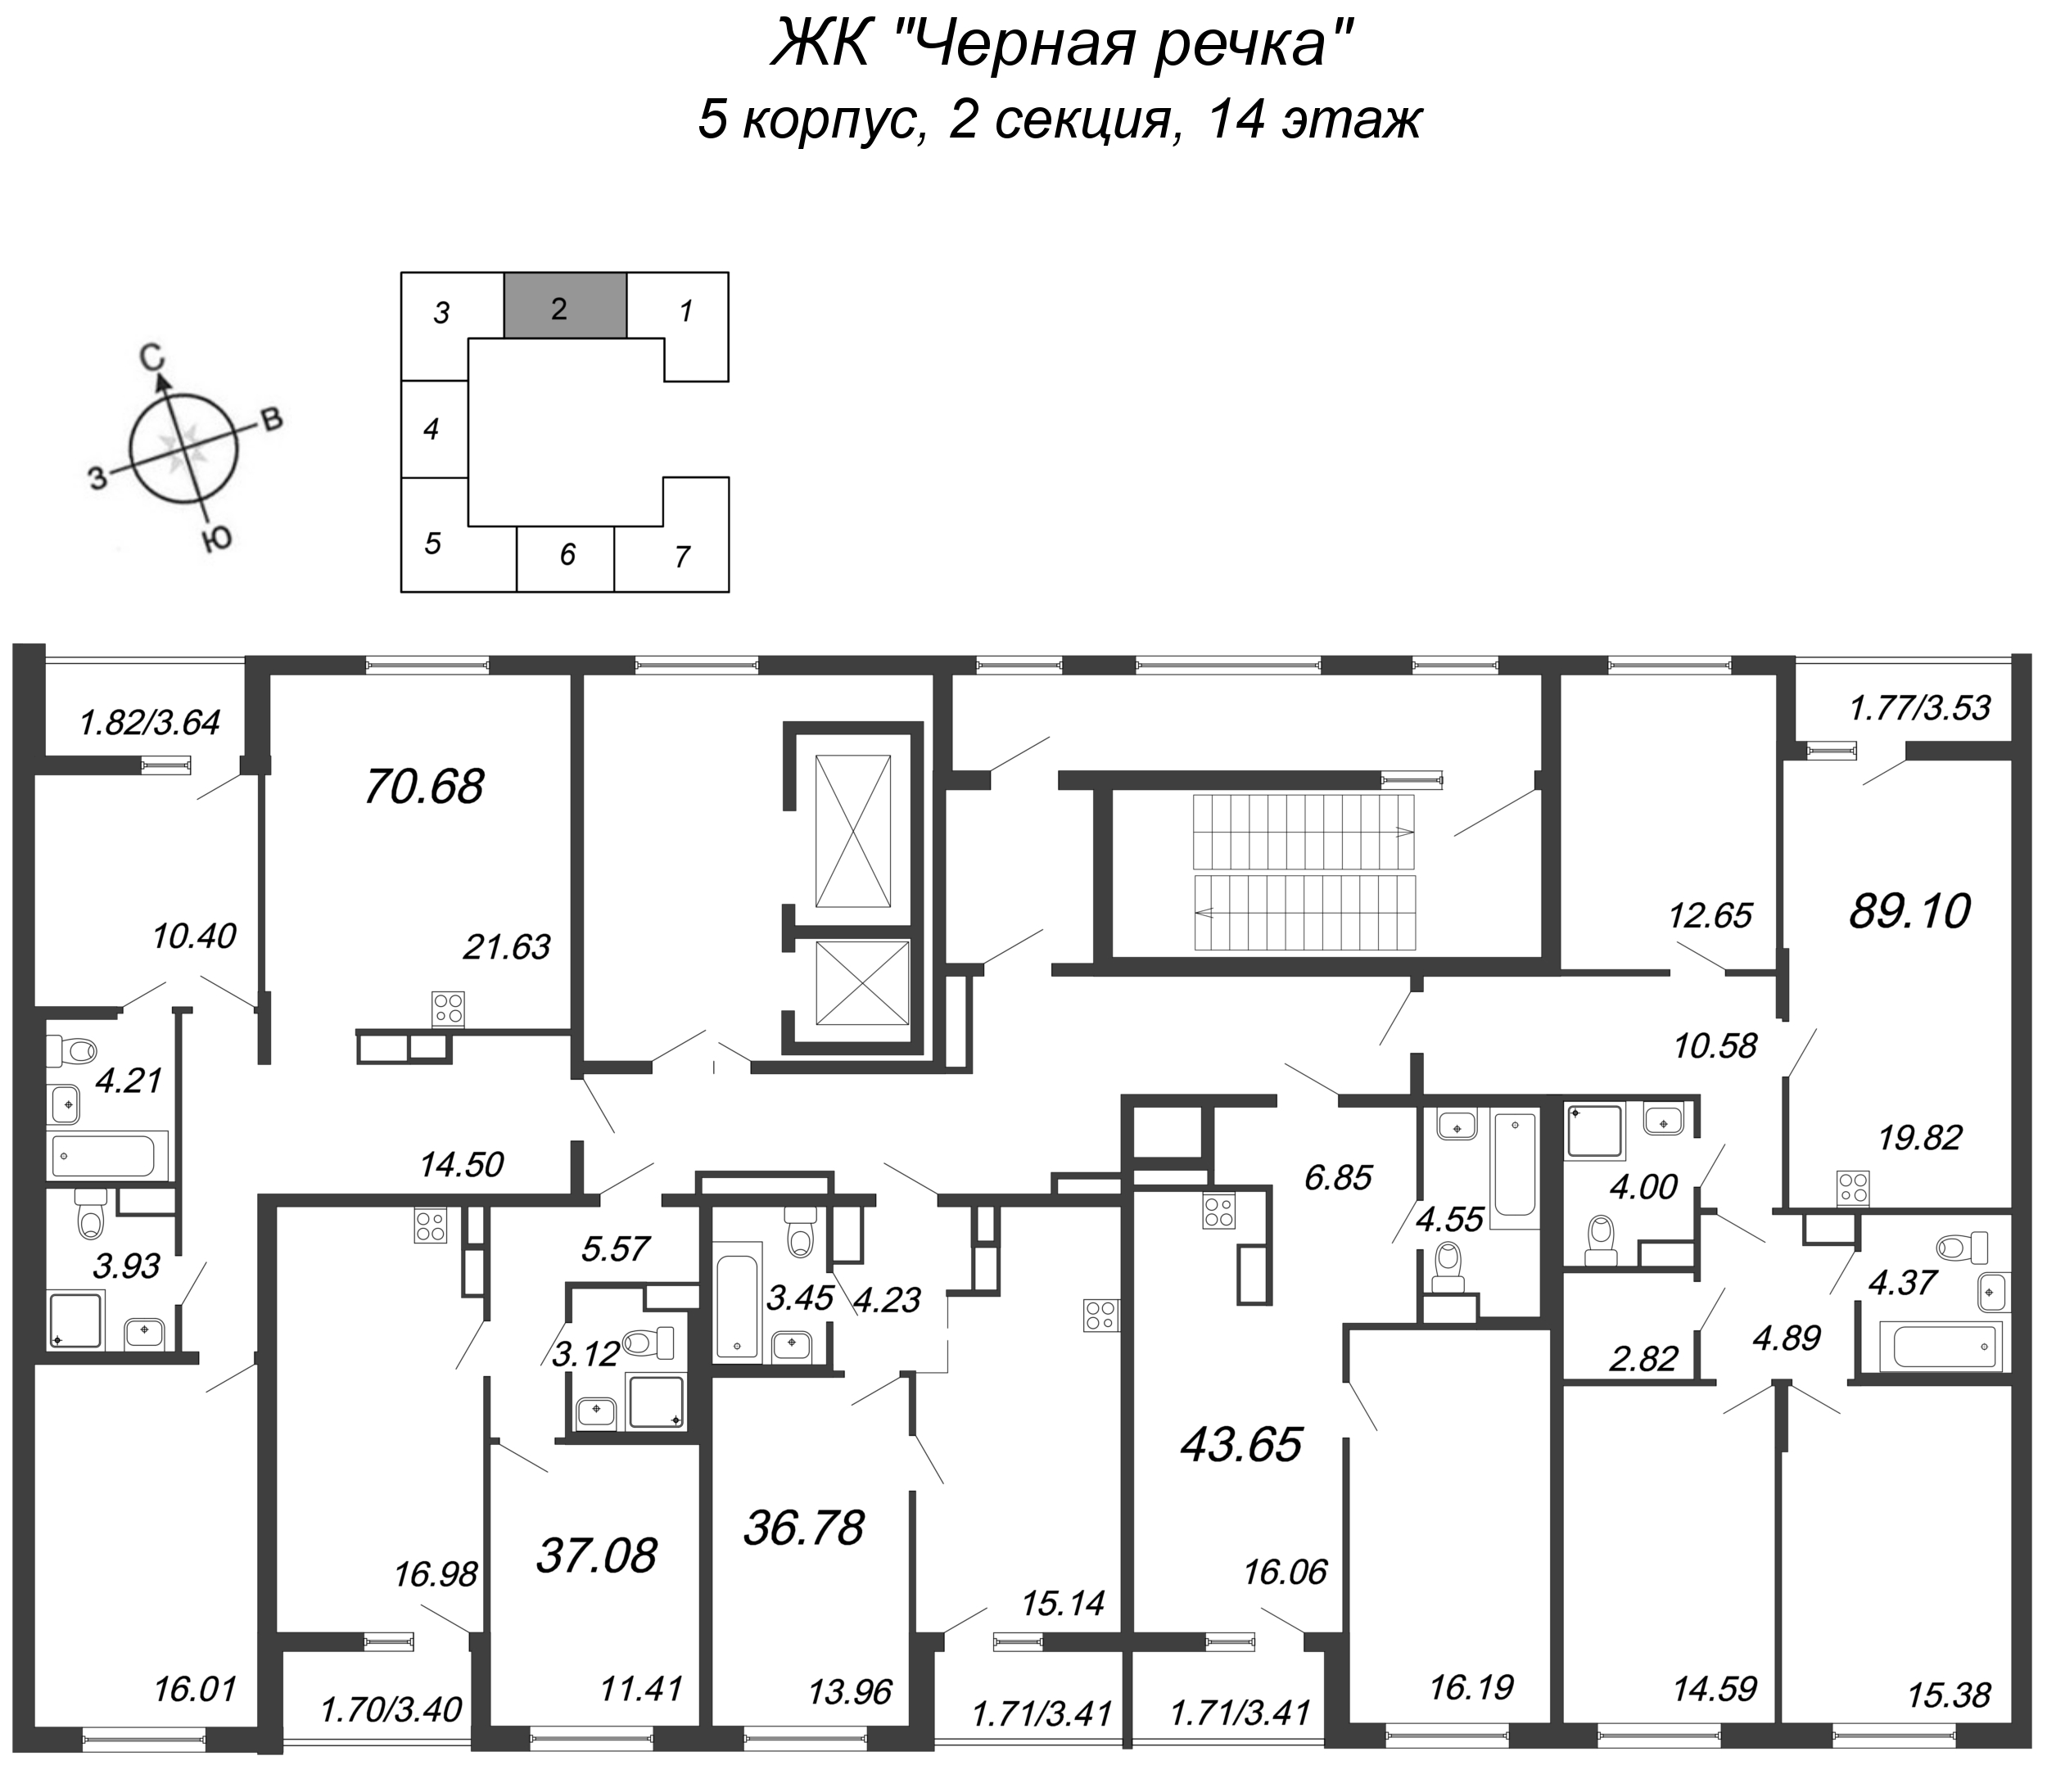 2-комнатная (Евро) квартира, 40.29 м² - планировка этажа